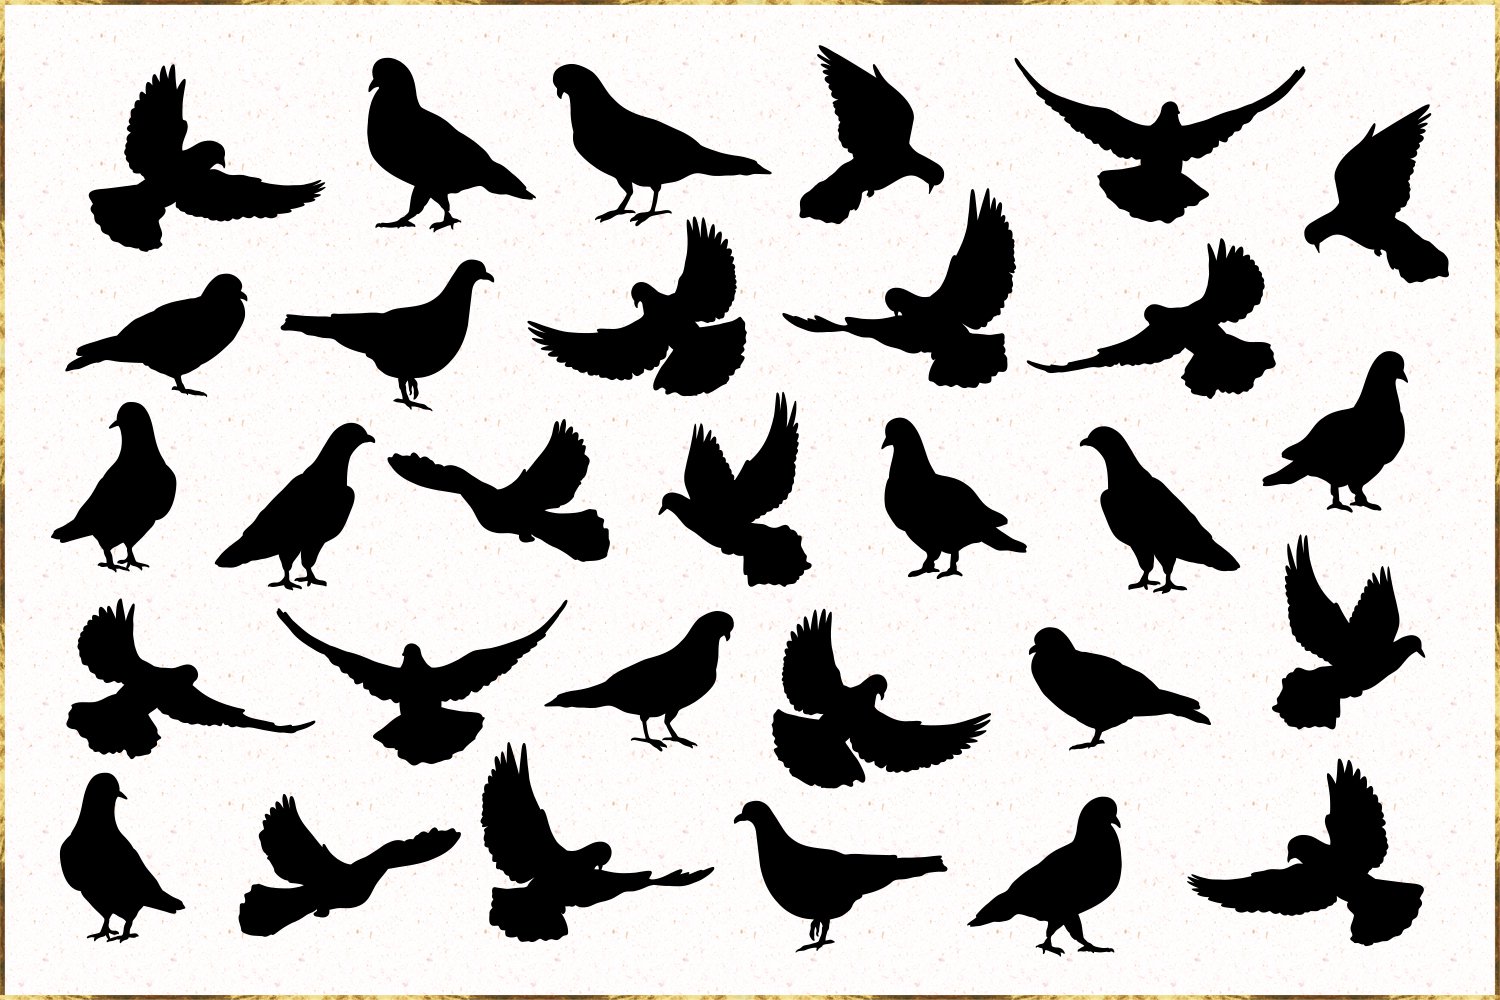 Black birds on a white background.